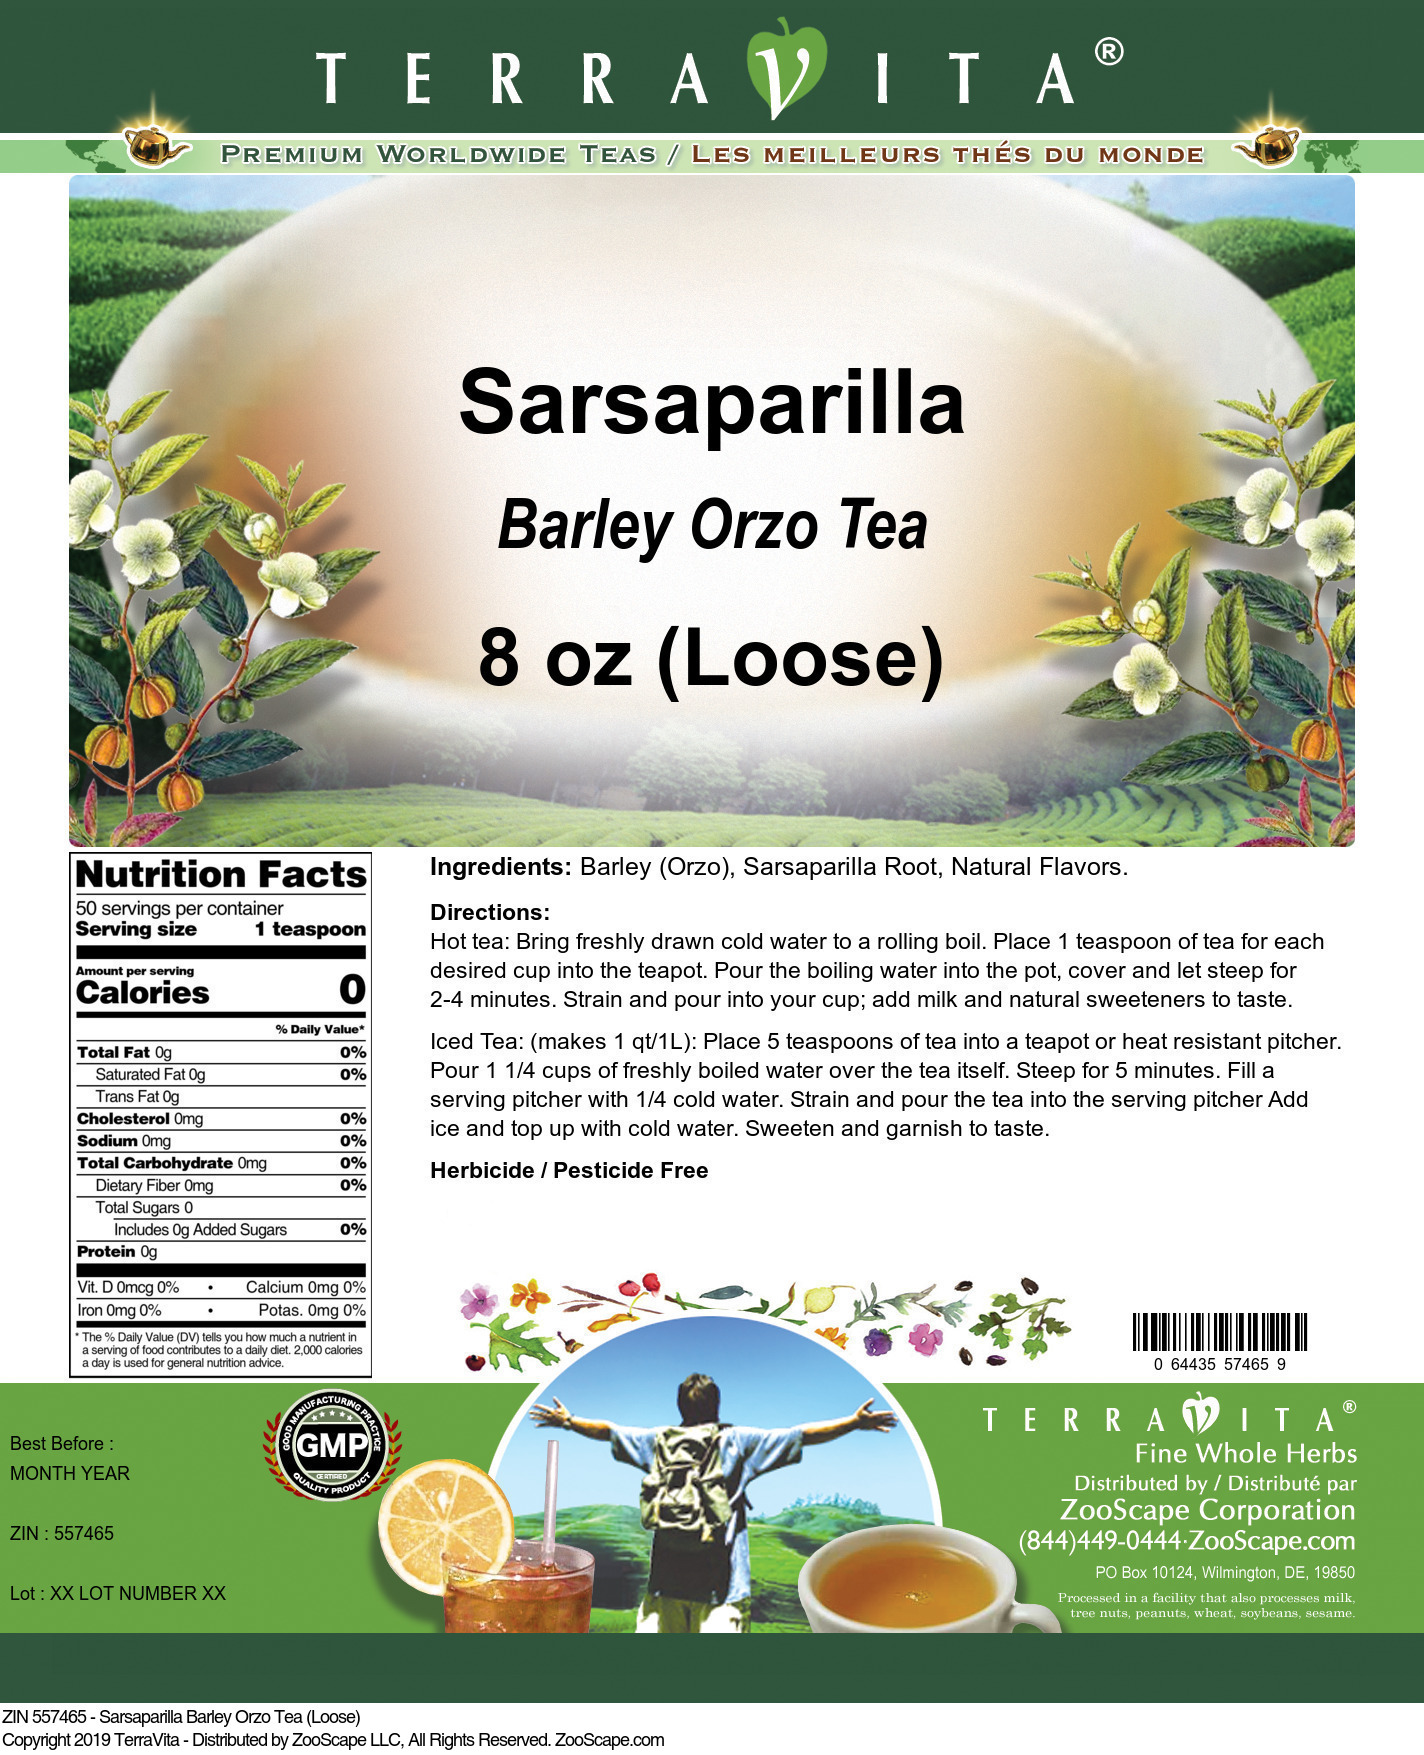 Sarsaparilla Barley Orzo Tea (Loose) - Label